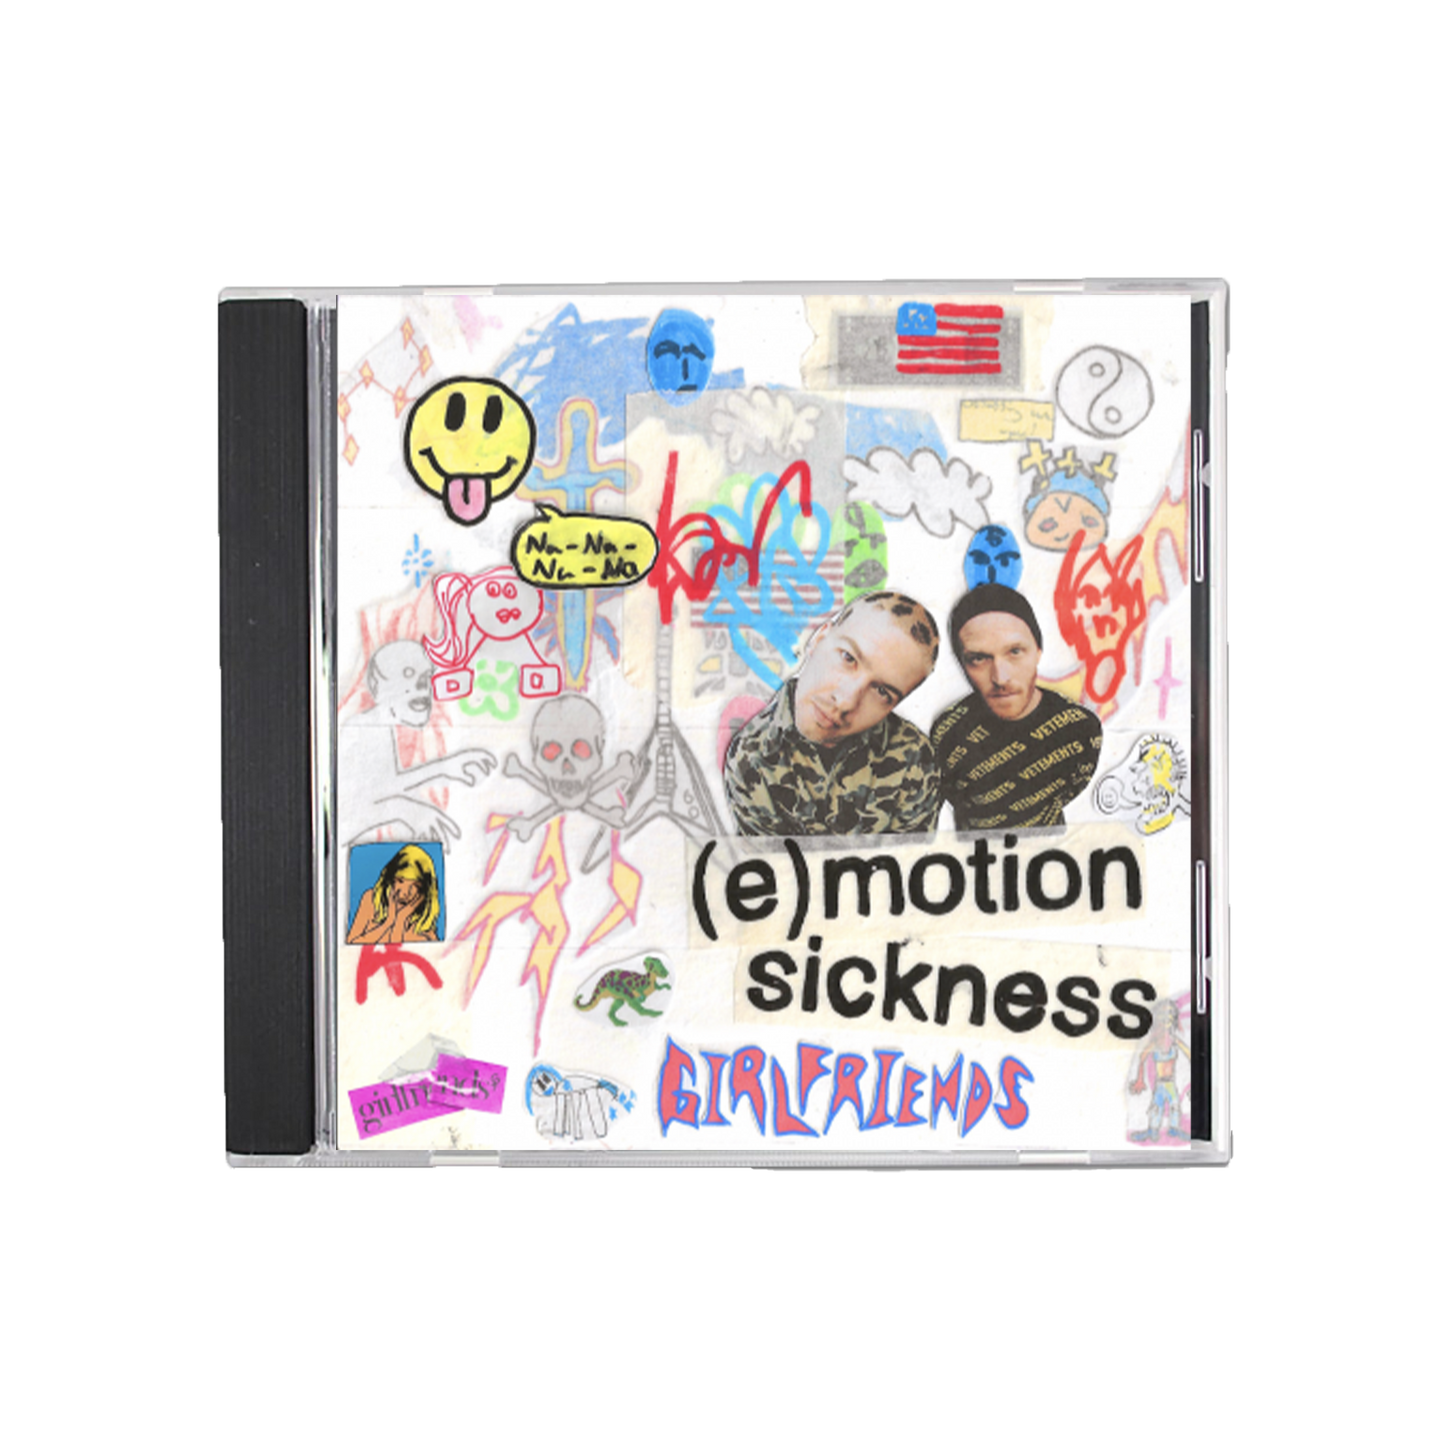 (e)motion sickness - CD